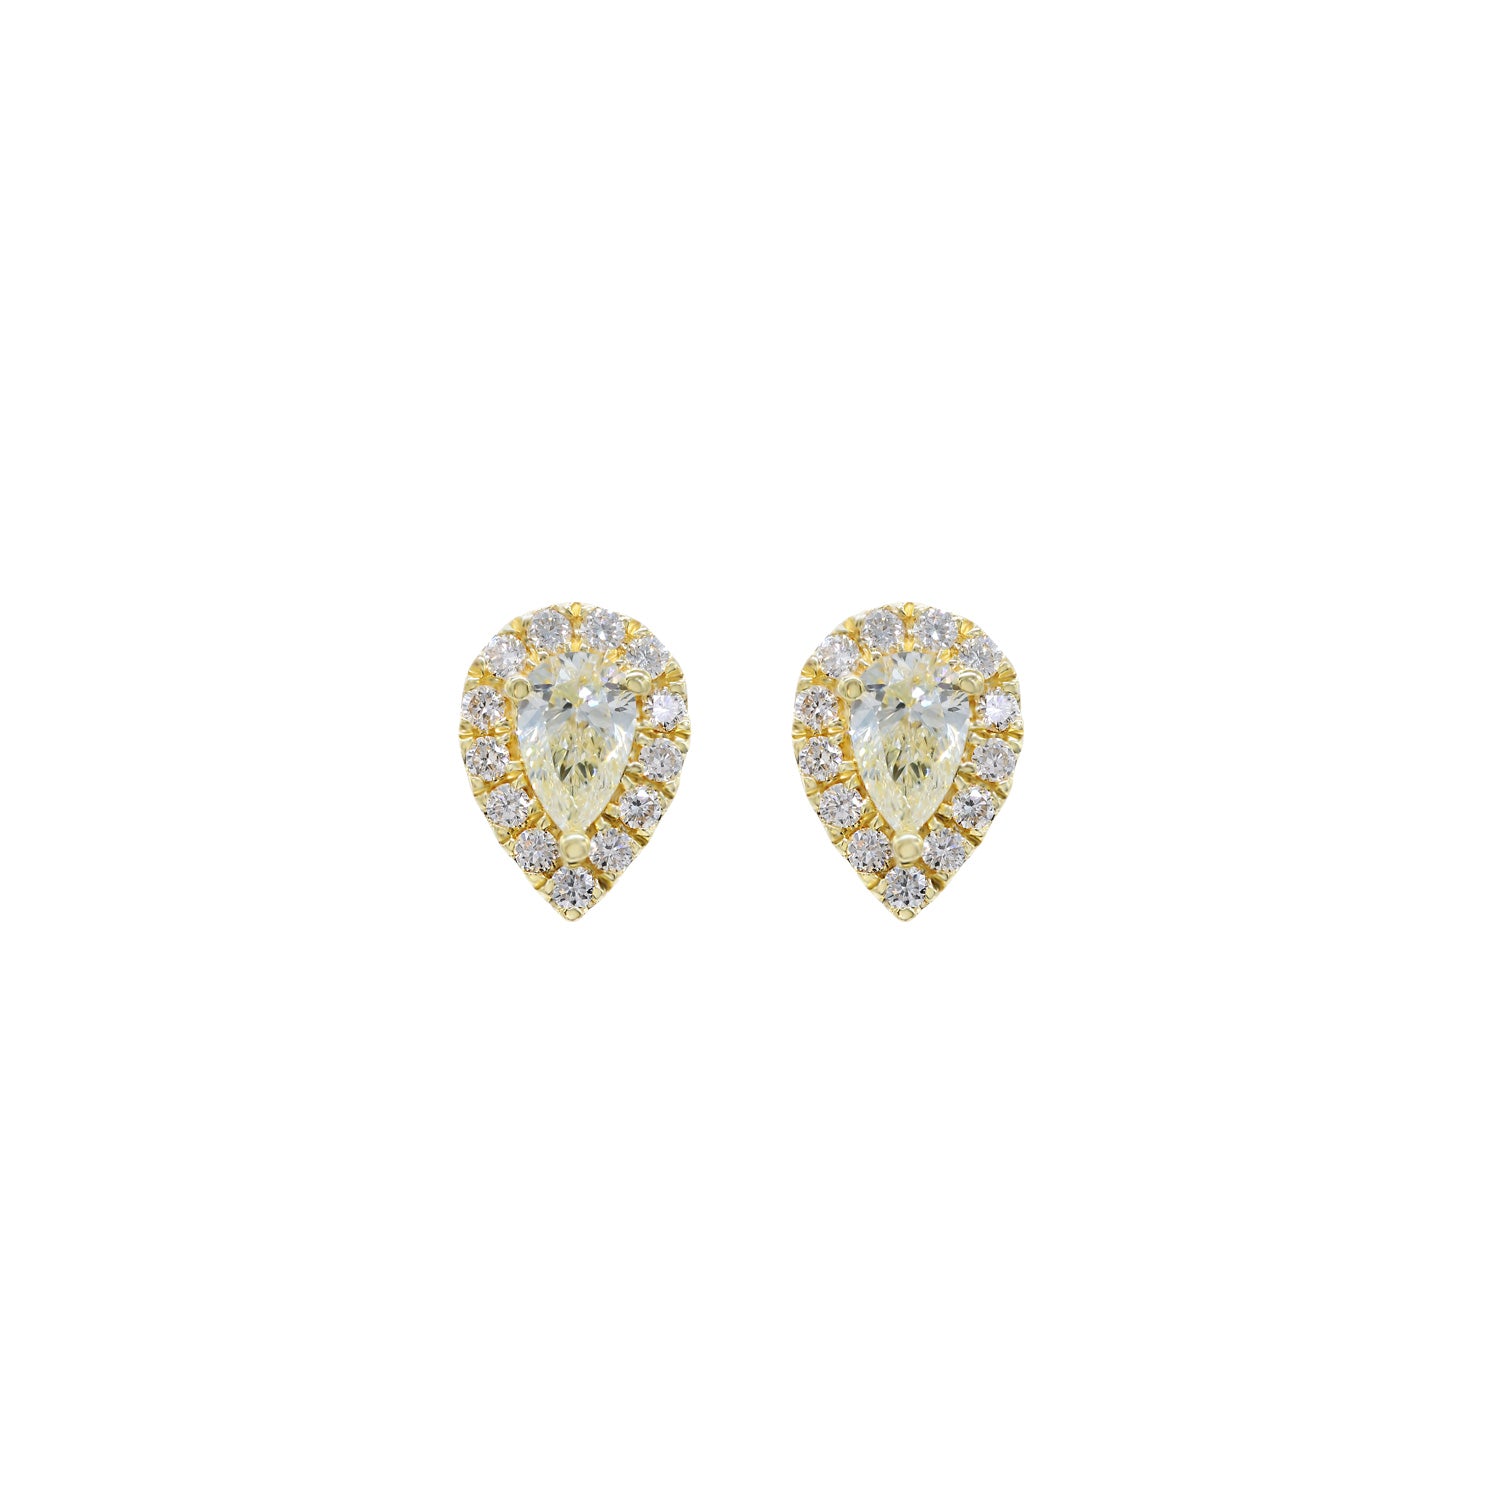 Yellow Diamond Earrings. Diamond stud earrings. Pear shaped yellow diamond earrings